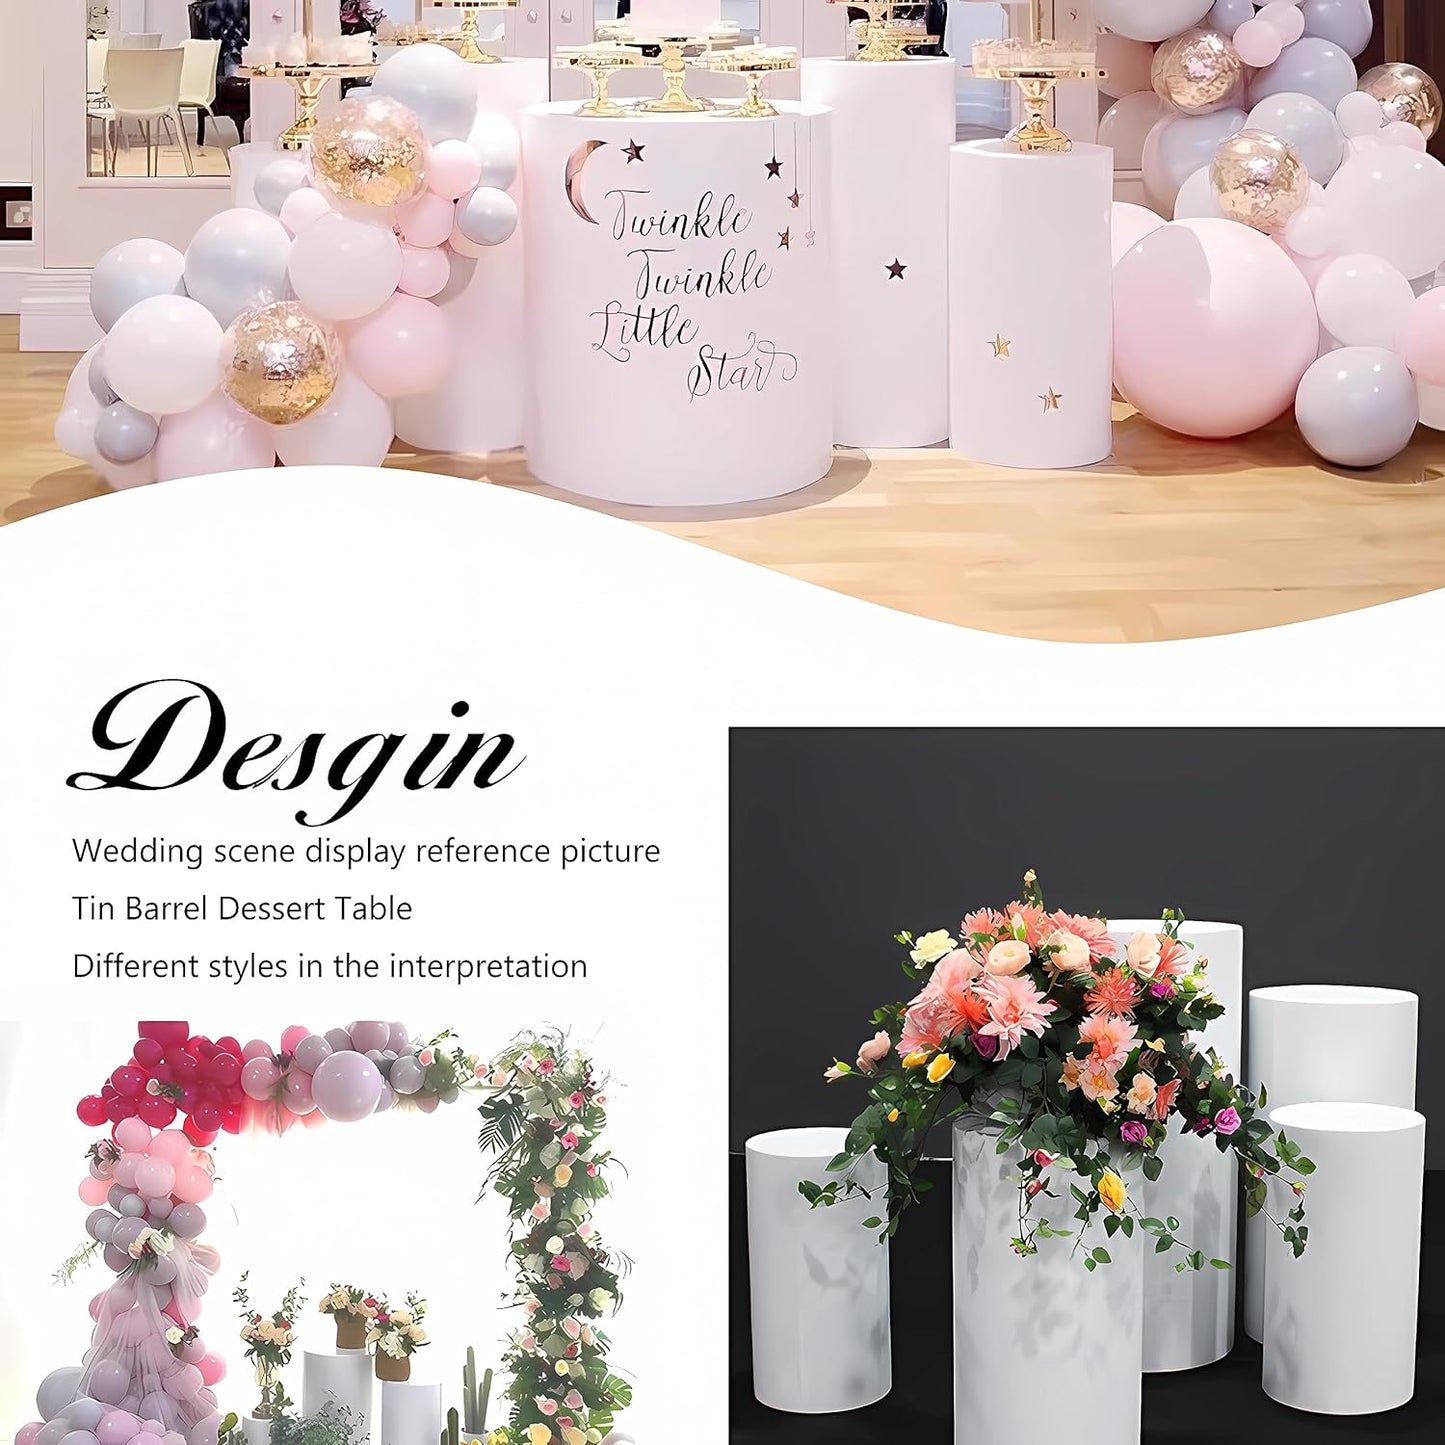 3Pcs Round Event Decor Cylinder Pedestal, Stands for Parties Art Decor Stand Wedding Plinths Pillars White for Trinkets Flowers Candles 23.6''(L),21.6''(M),19.6''(S)